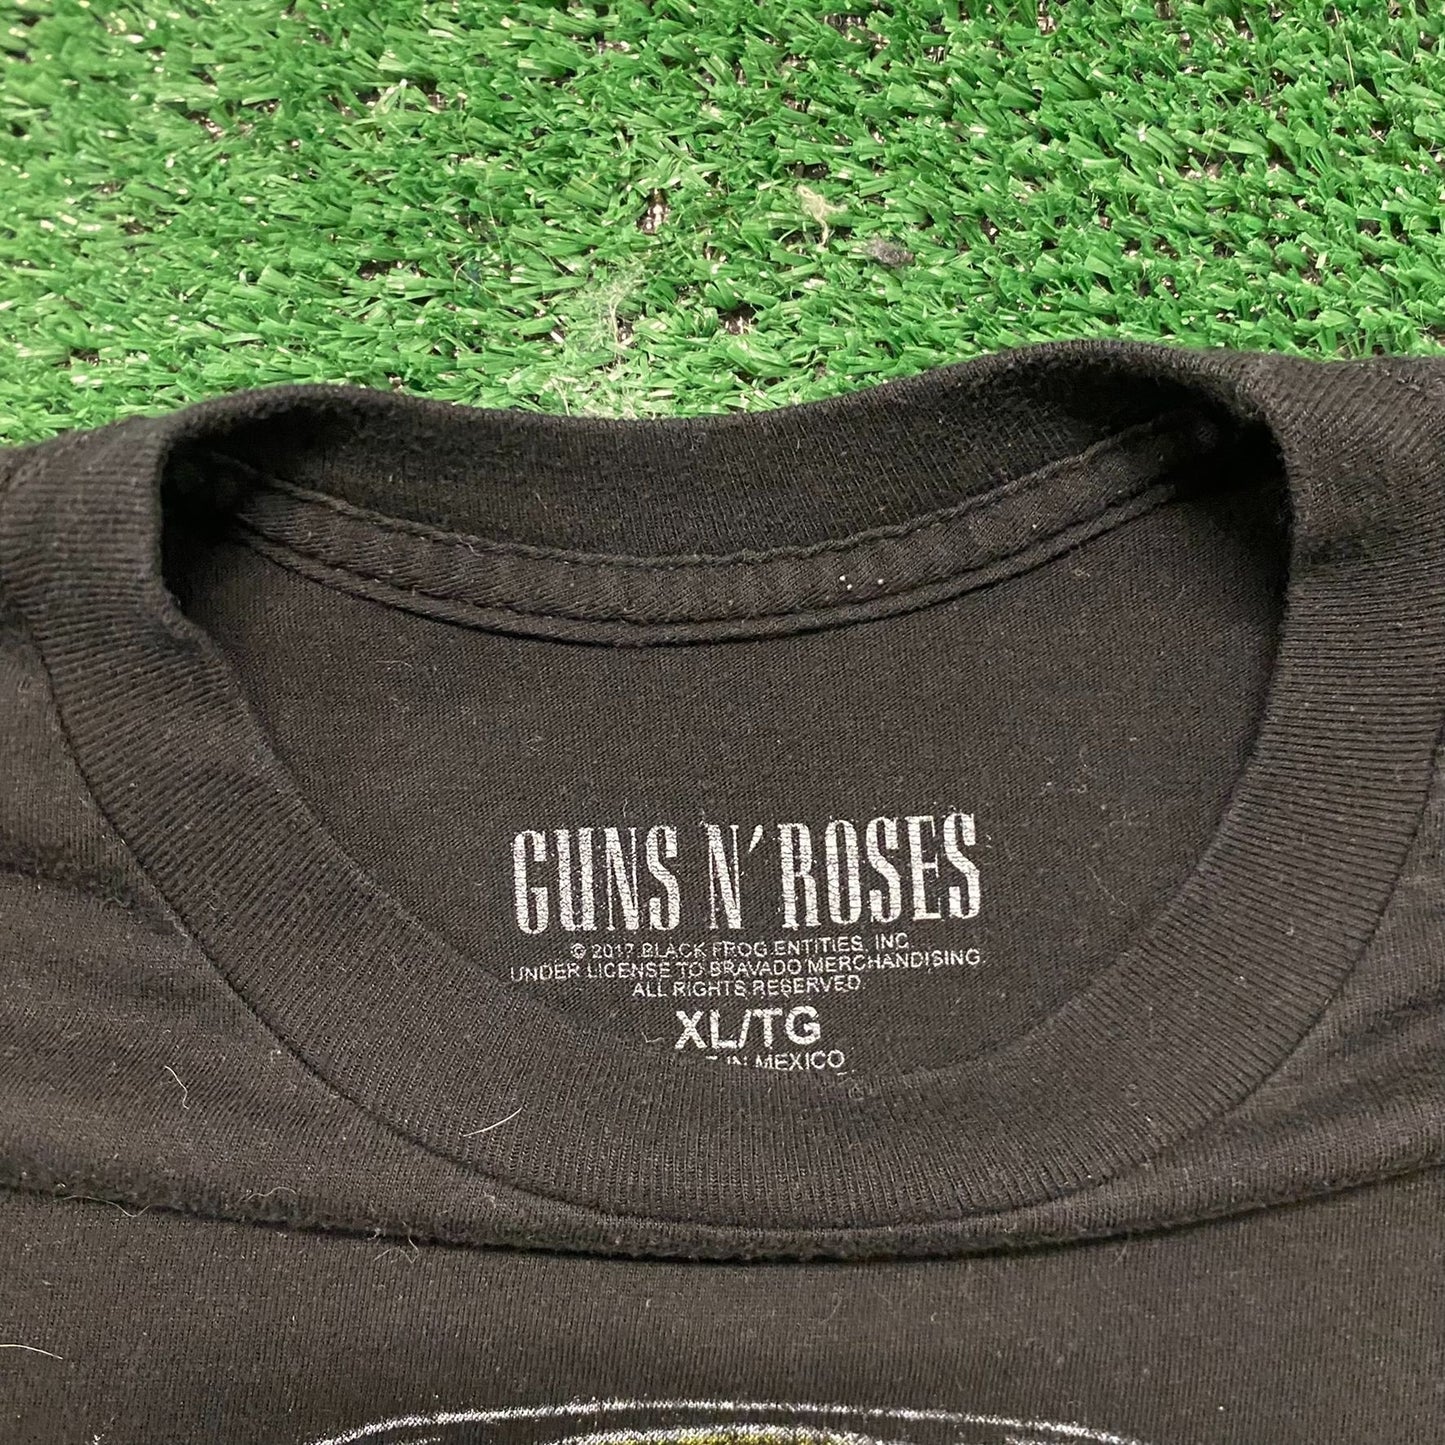 Guns N Roses Skull Retro Vintage Rock Band T-Shirt